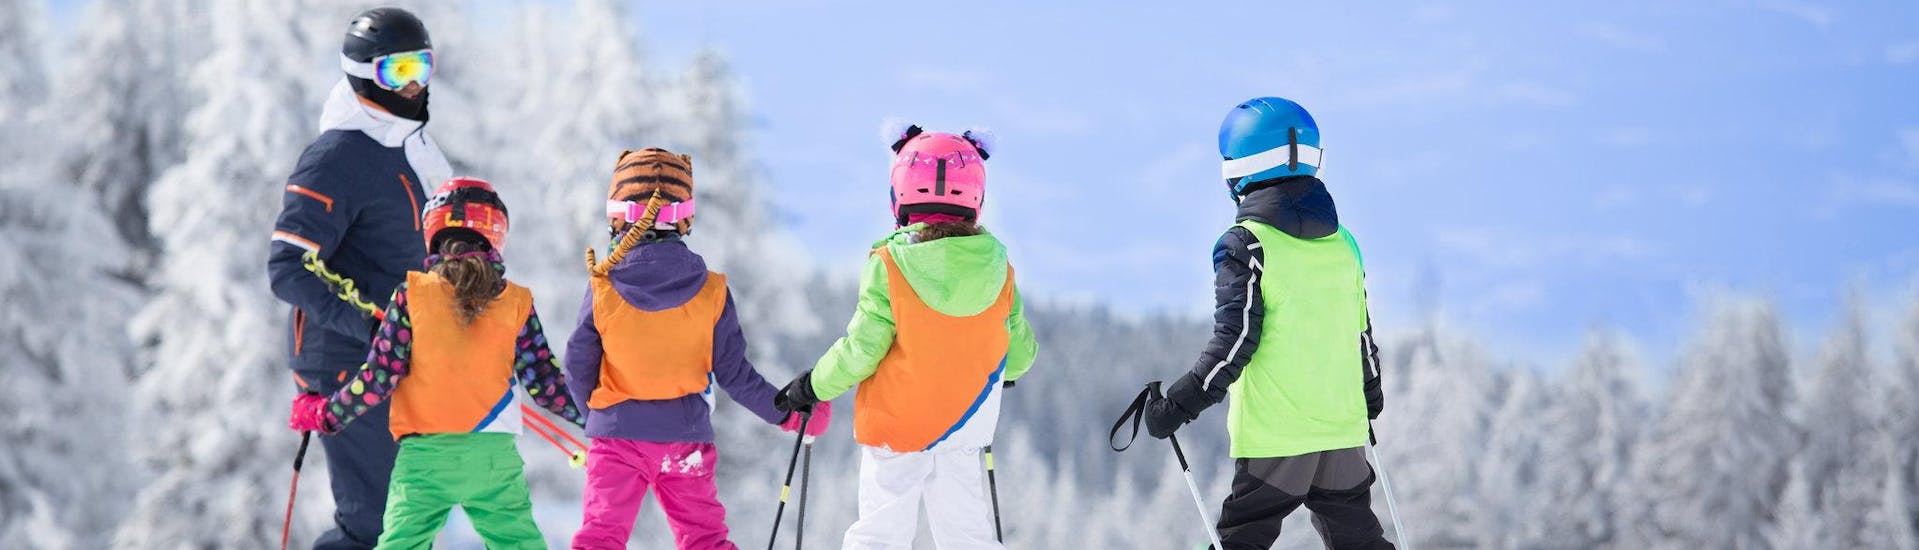 3 skiers prepare for their ski lessons in English in the ski resort of Tignes.